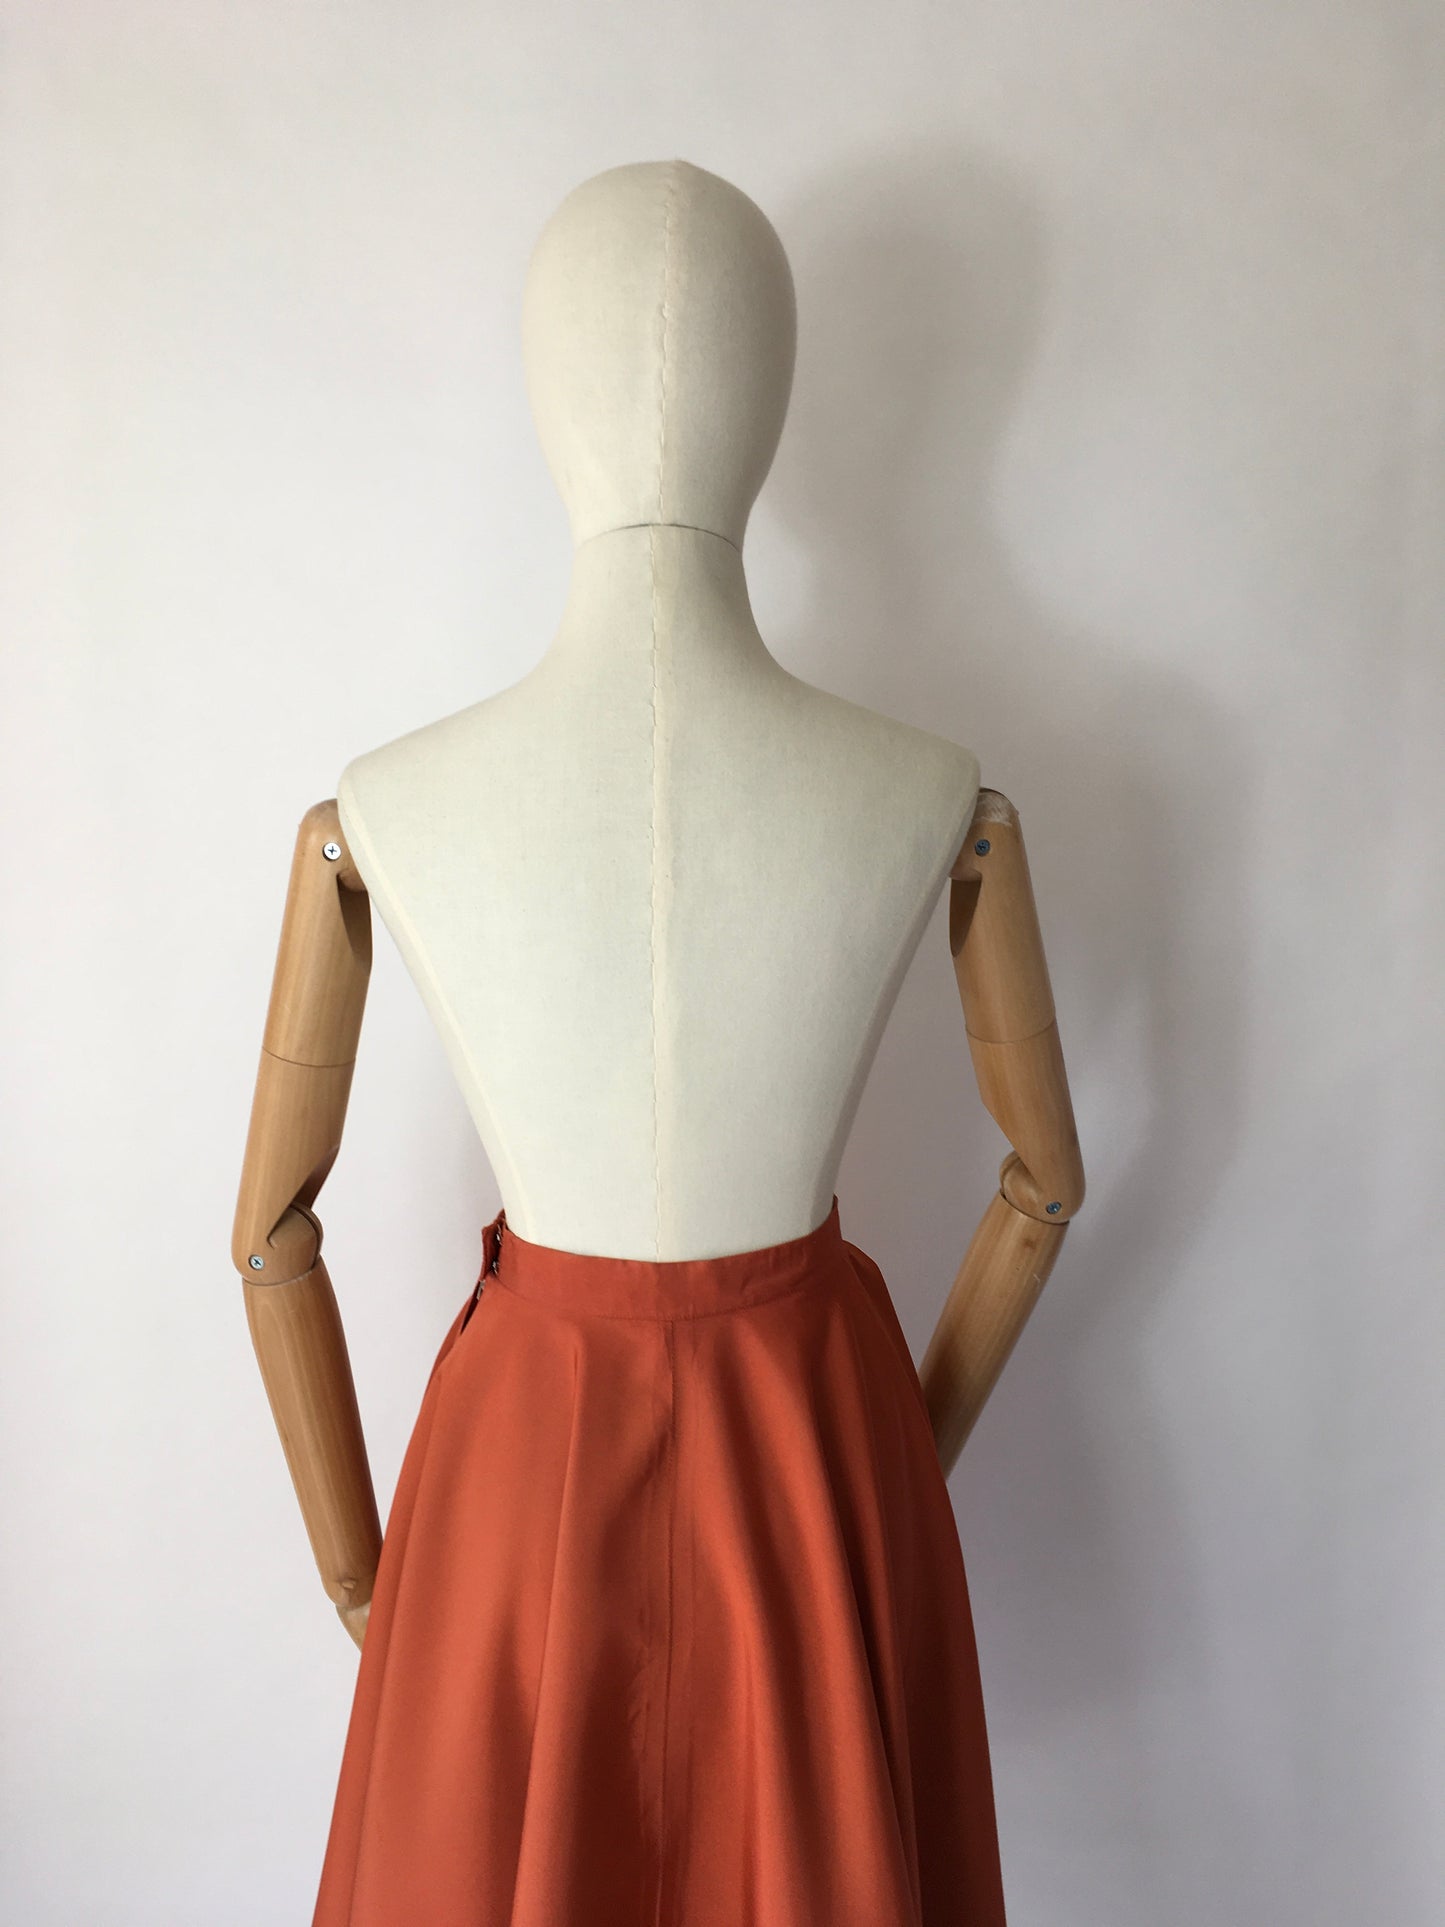 Original 1950’s Full Circle Skirt - In a Lovely Rust Taffeta Blend Fabric